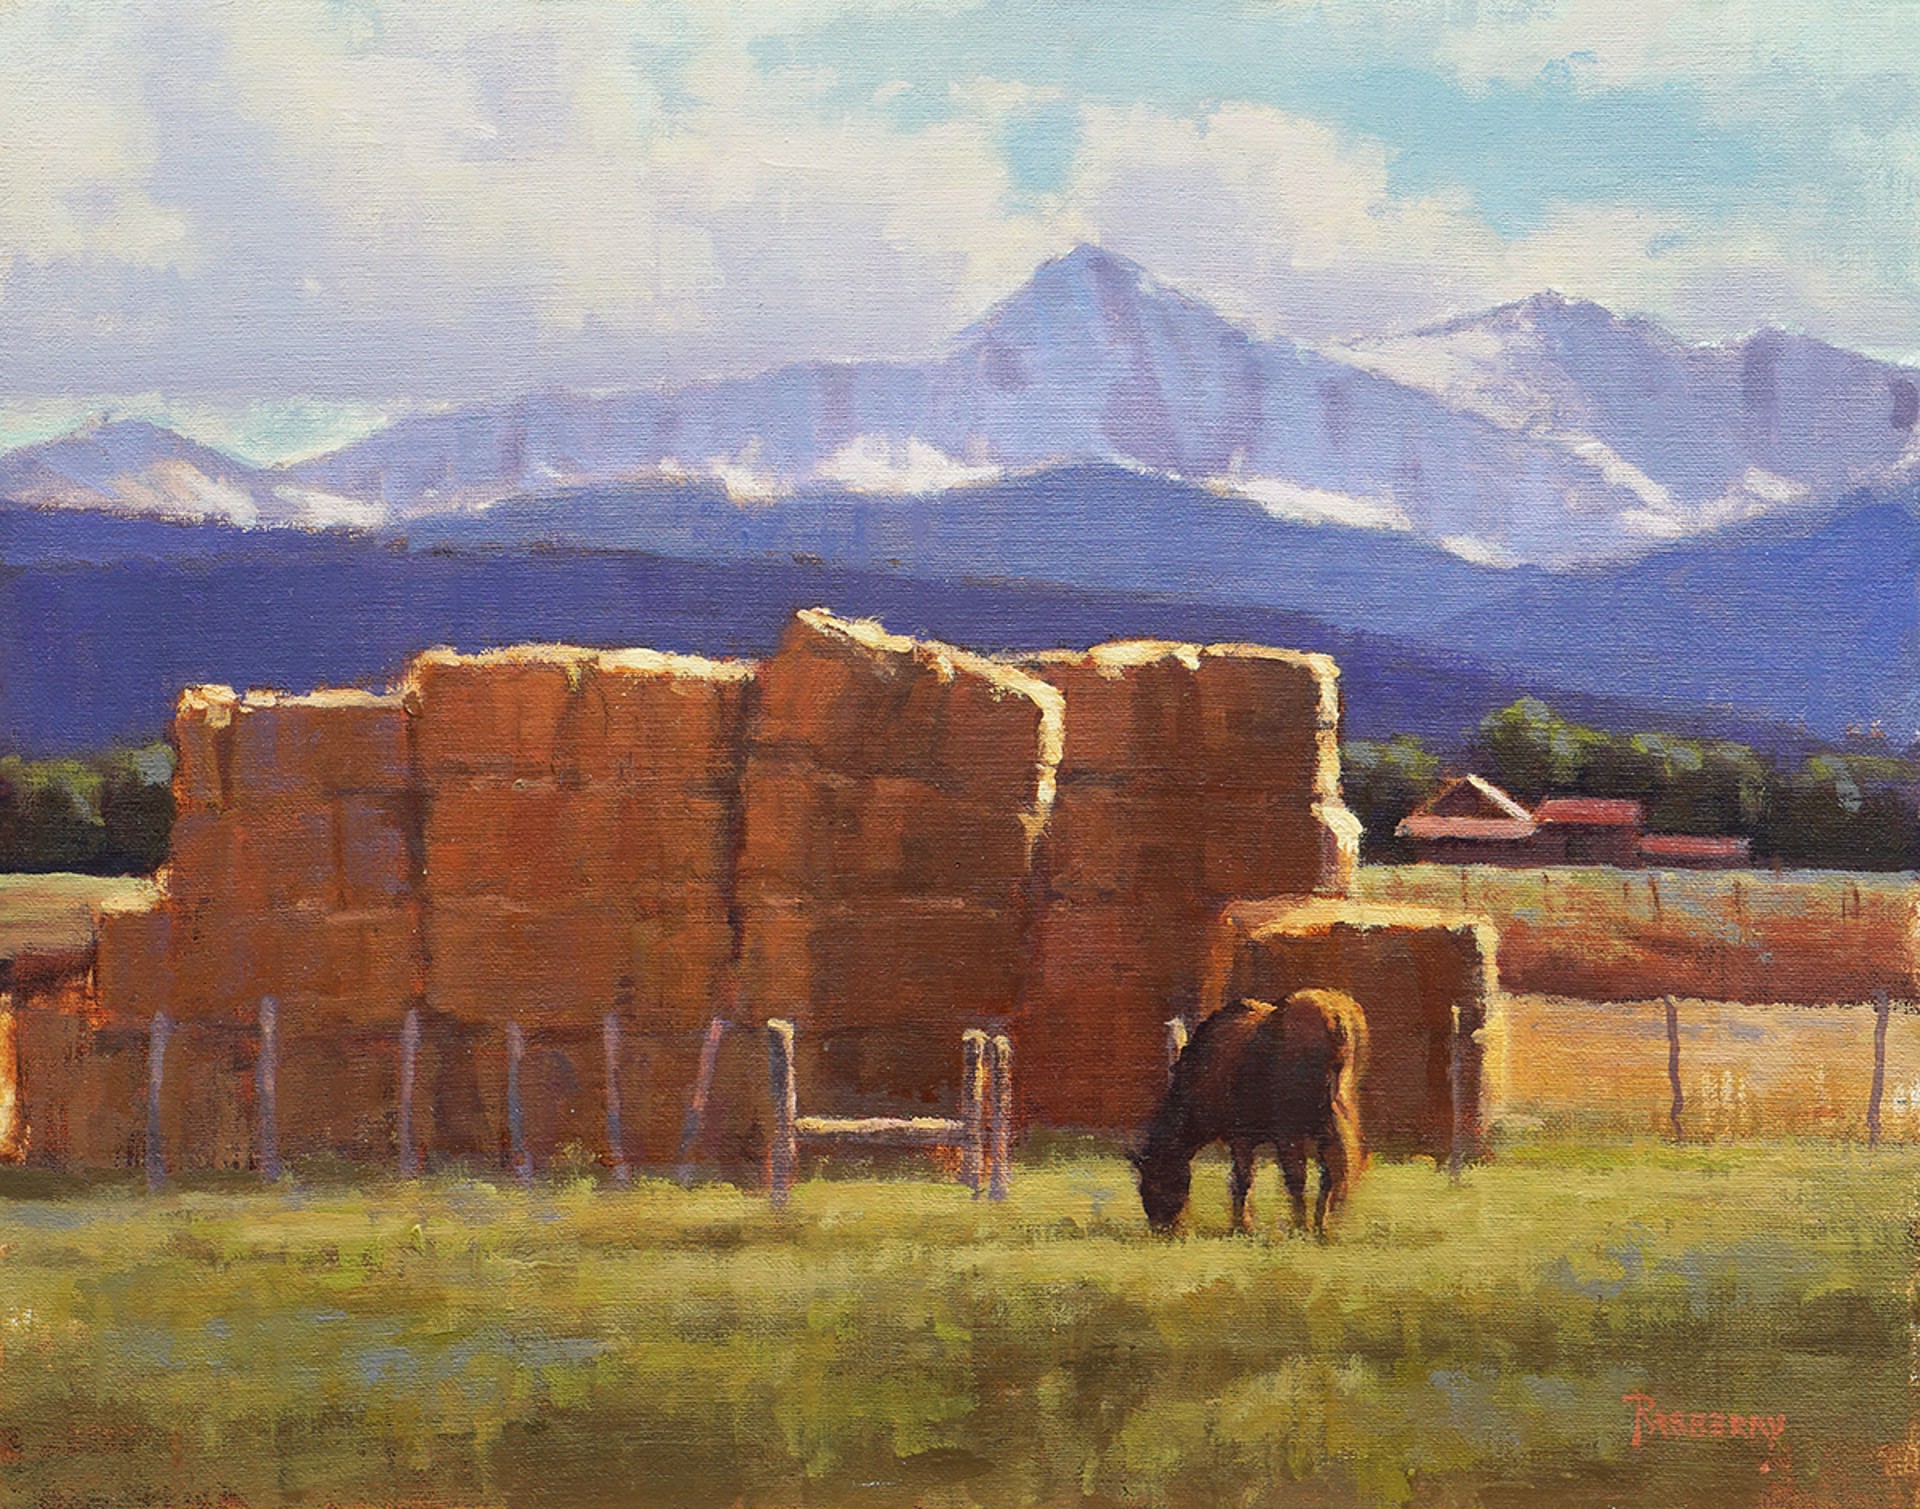 Mountain Valley Hay Bales by John Rasberry